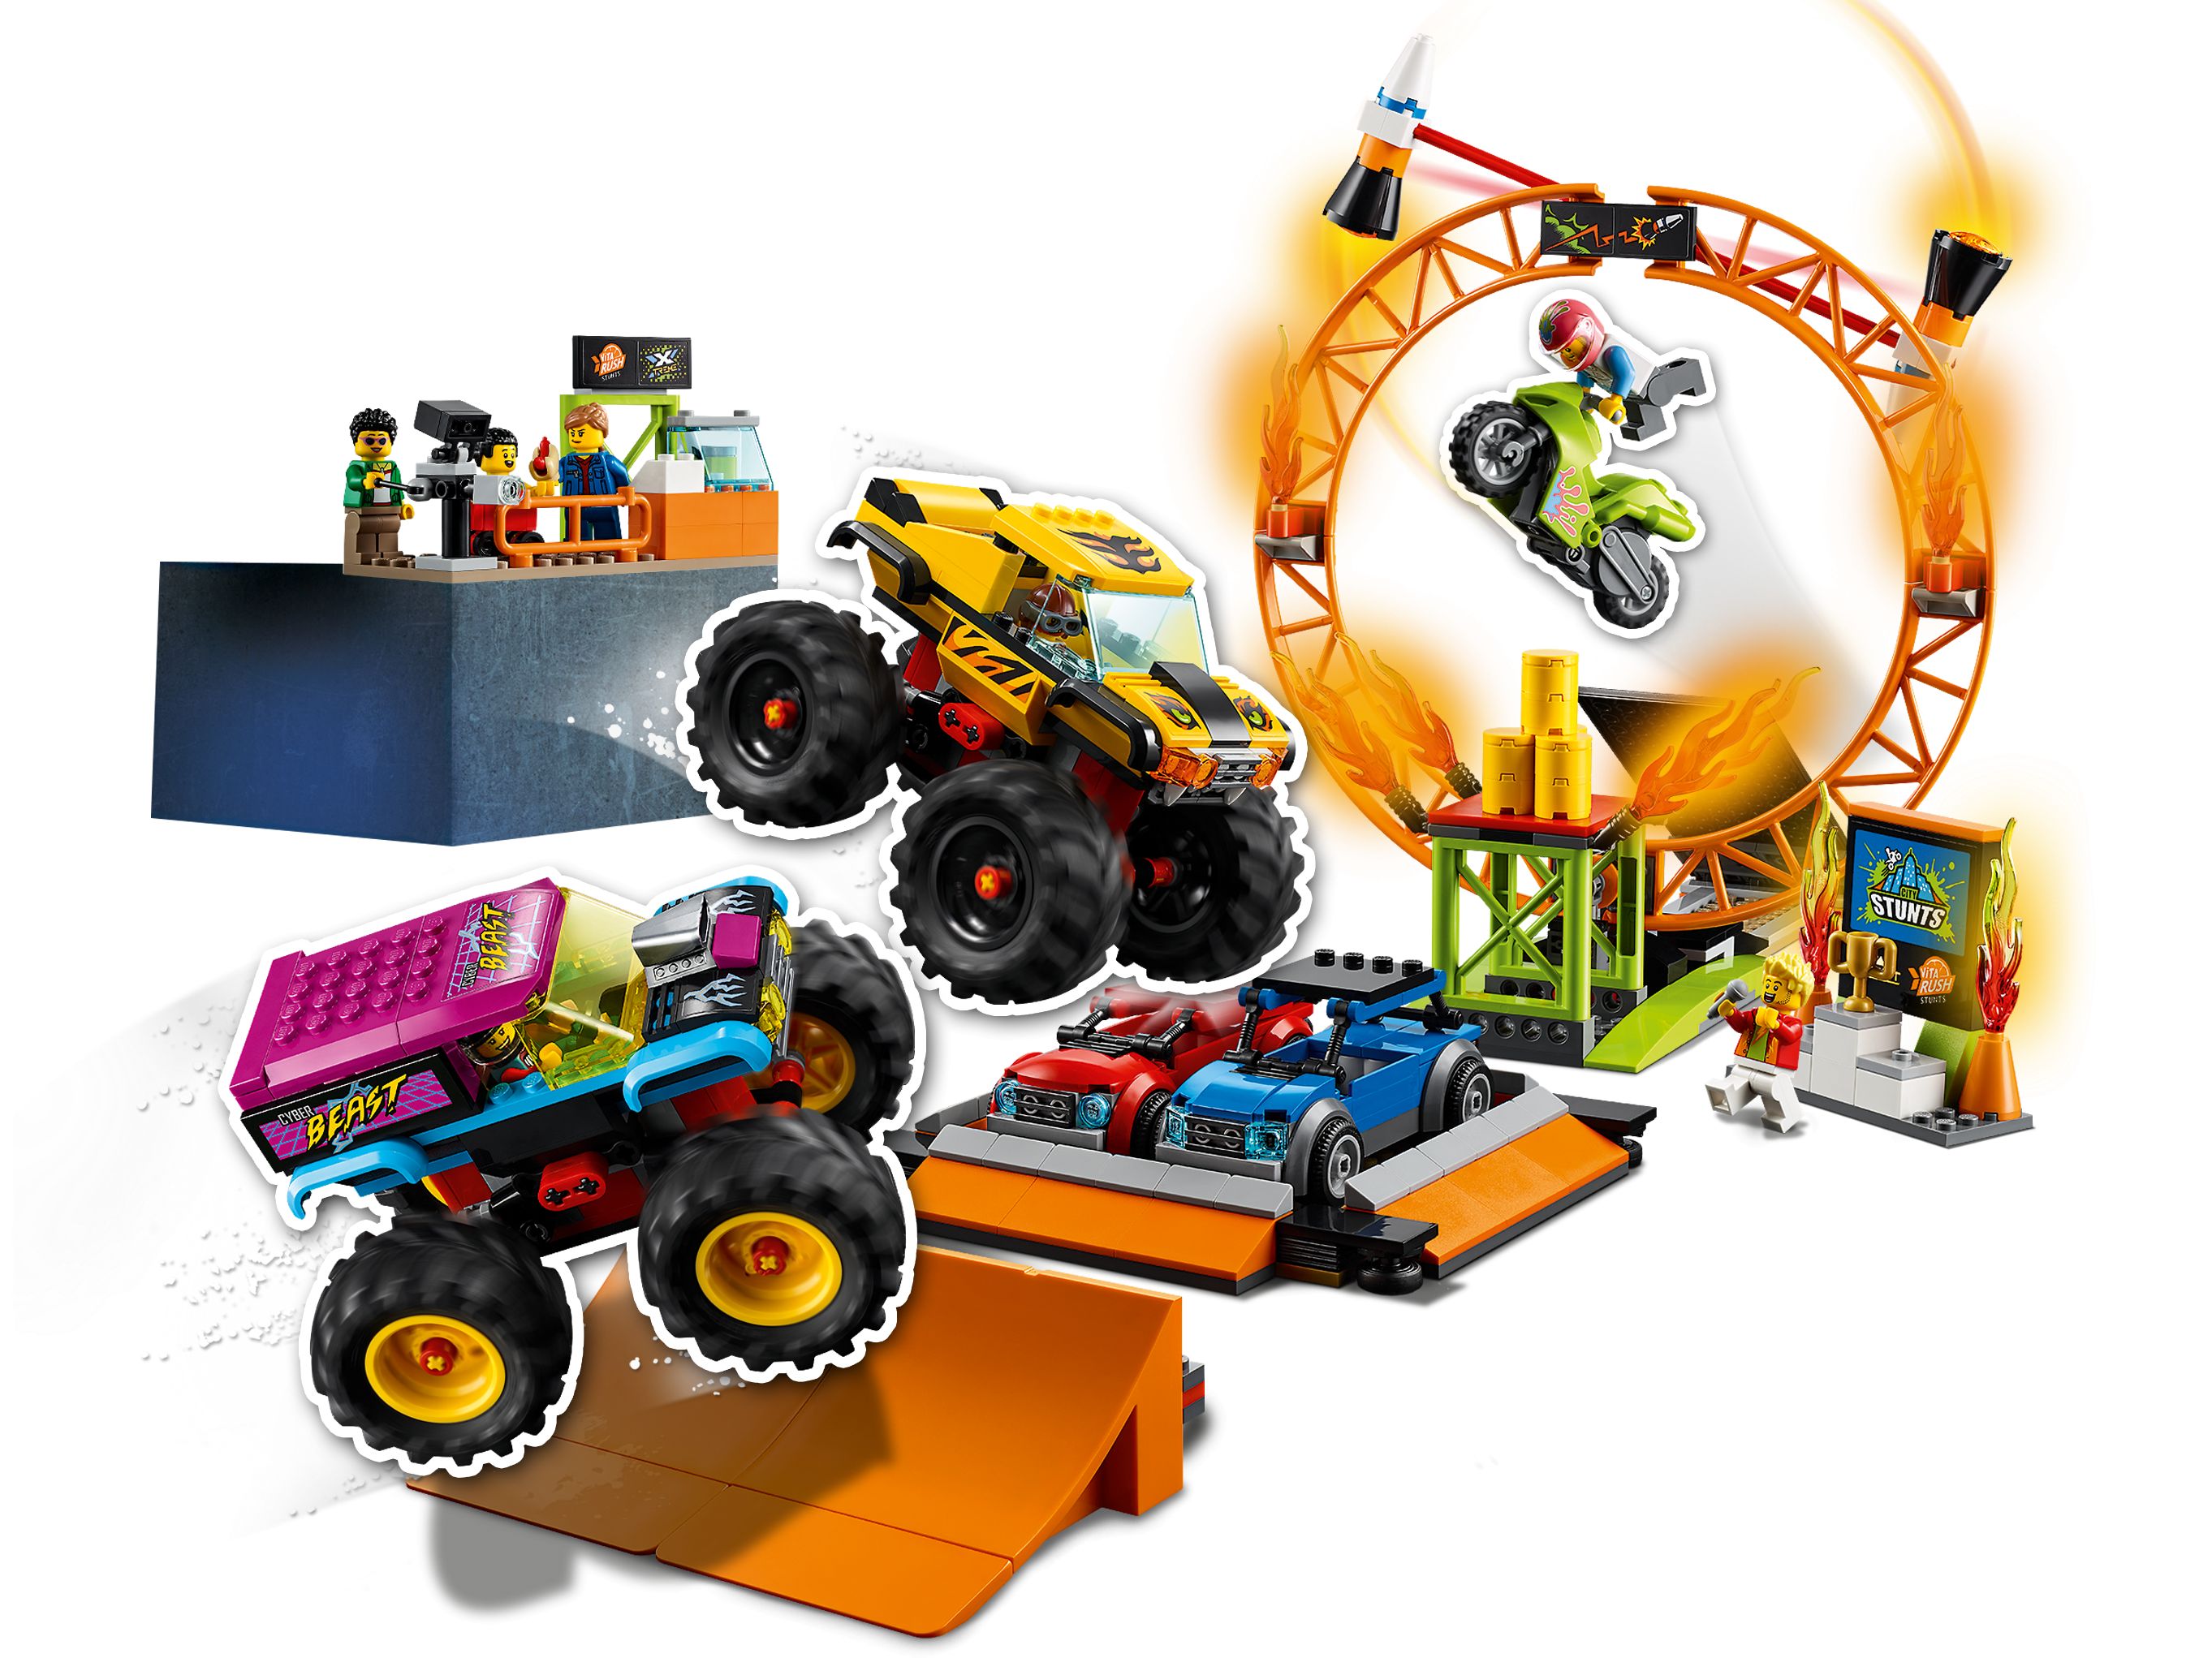 LEGO City 60295 Stuntshow-Arena LEGO_60295_alt2.jpg